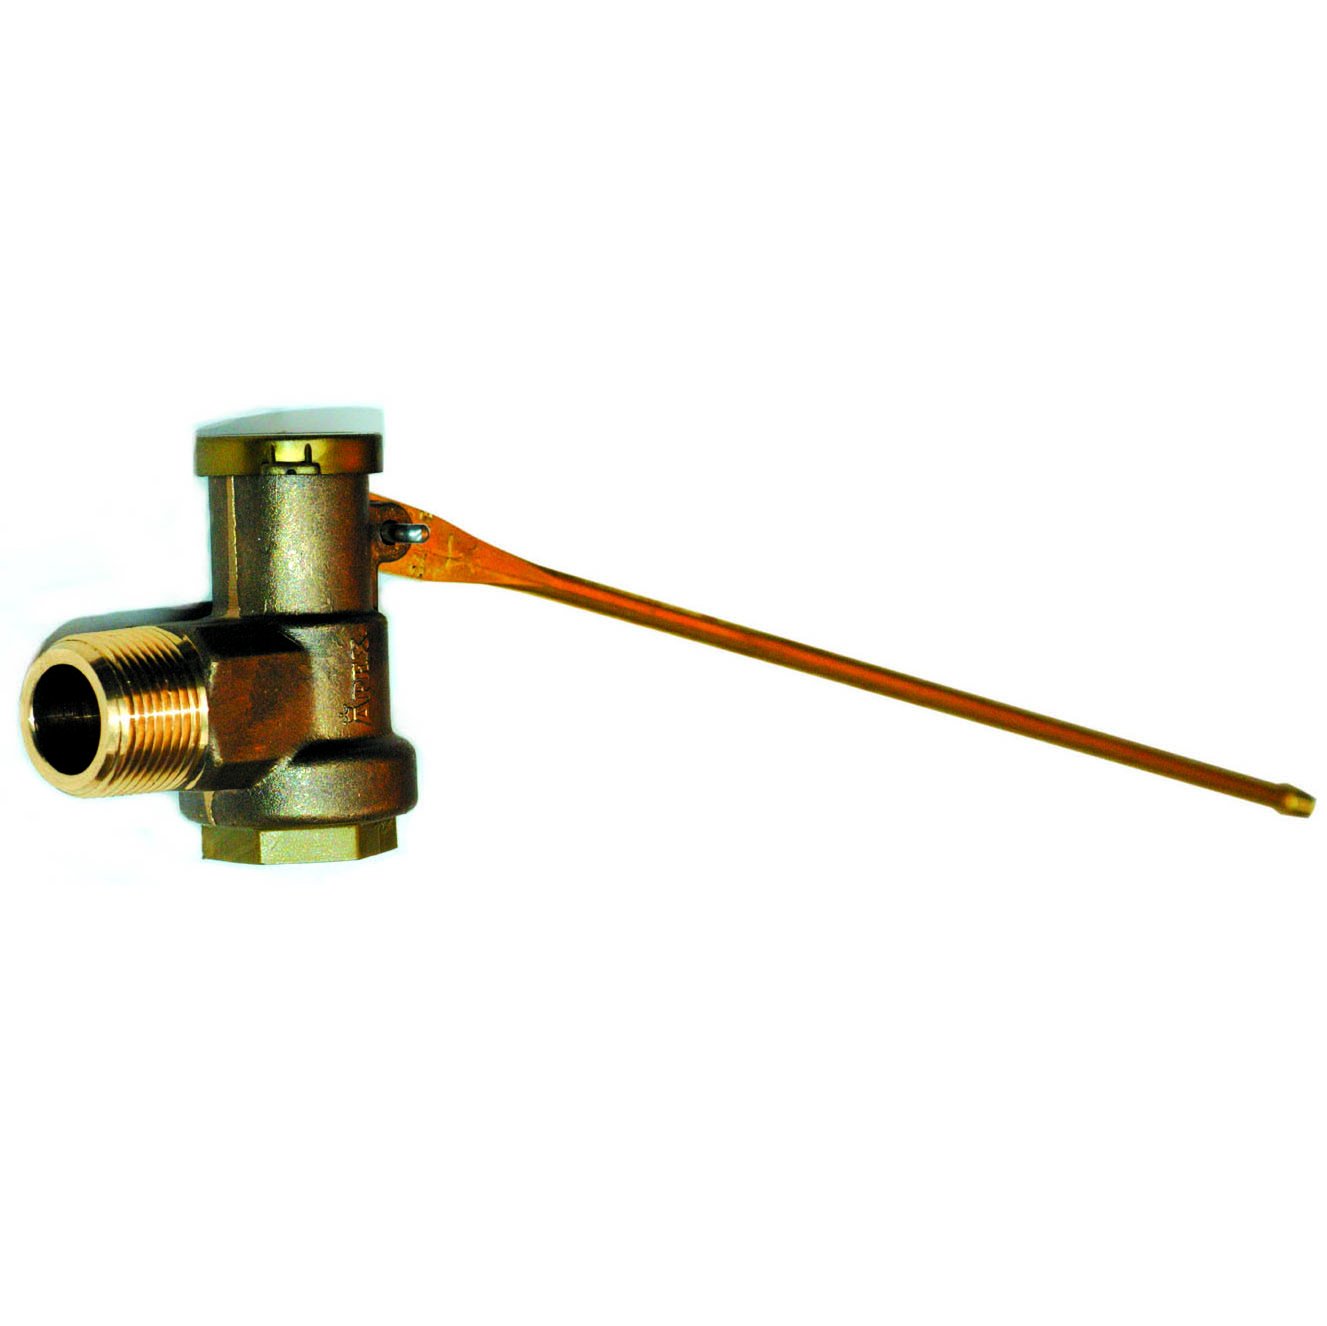 Brass ballcock valve with float